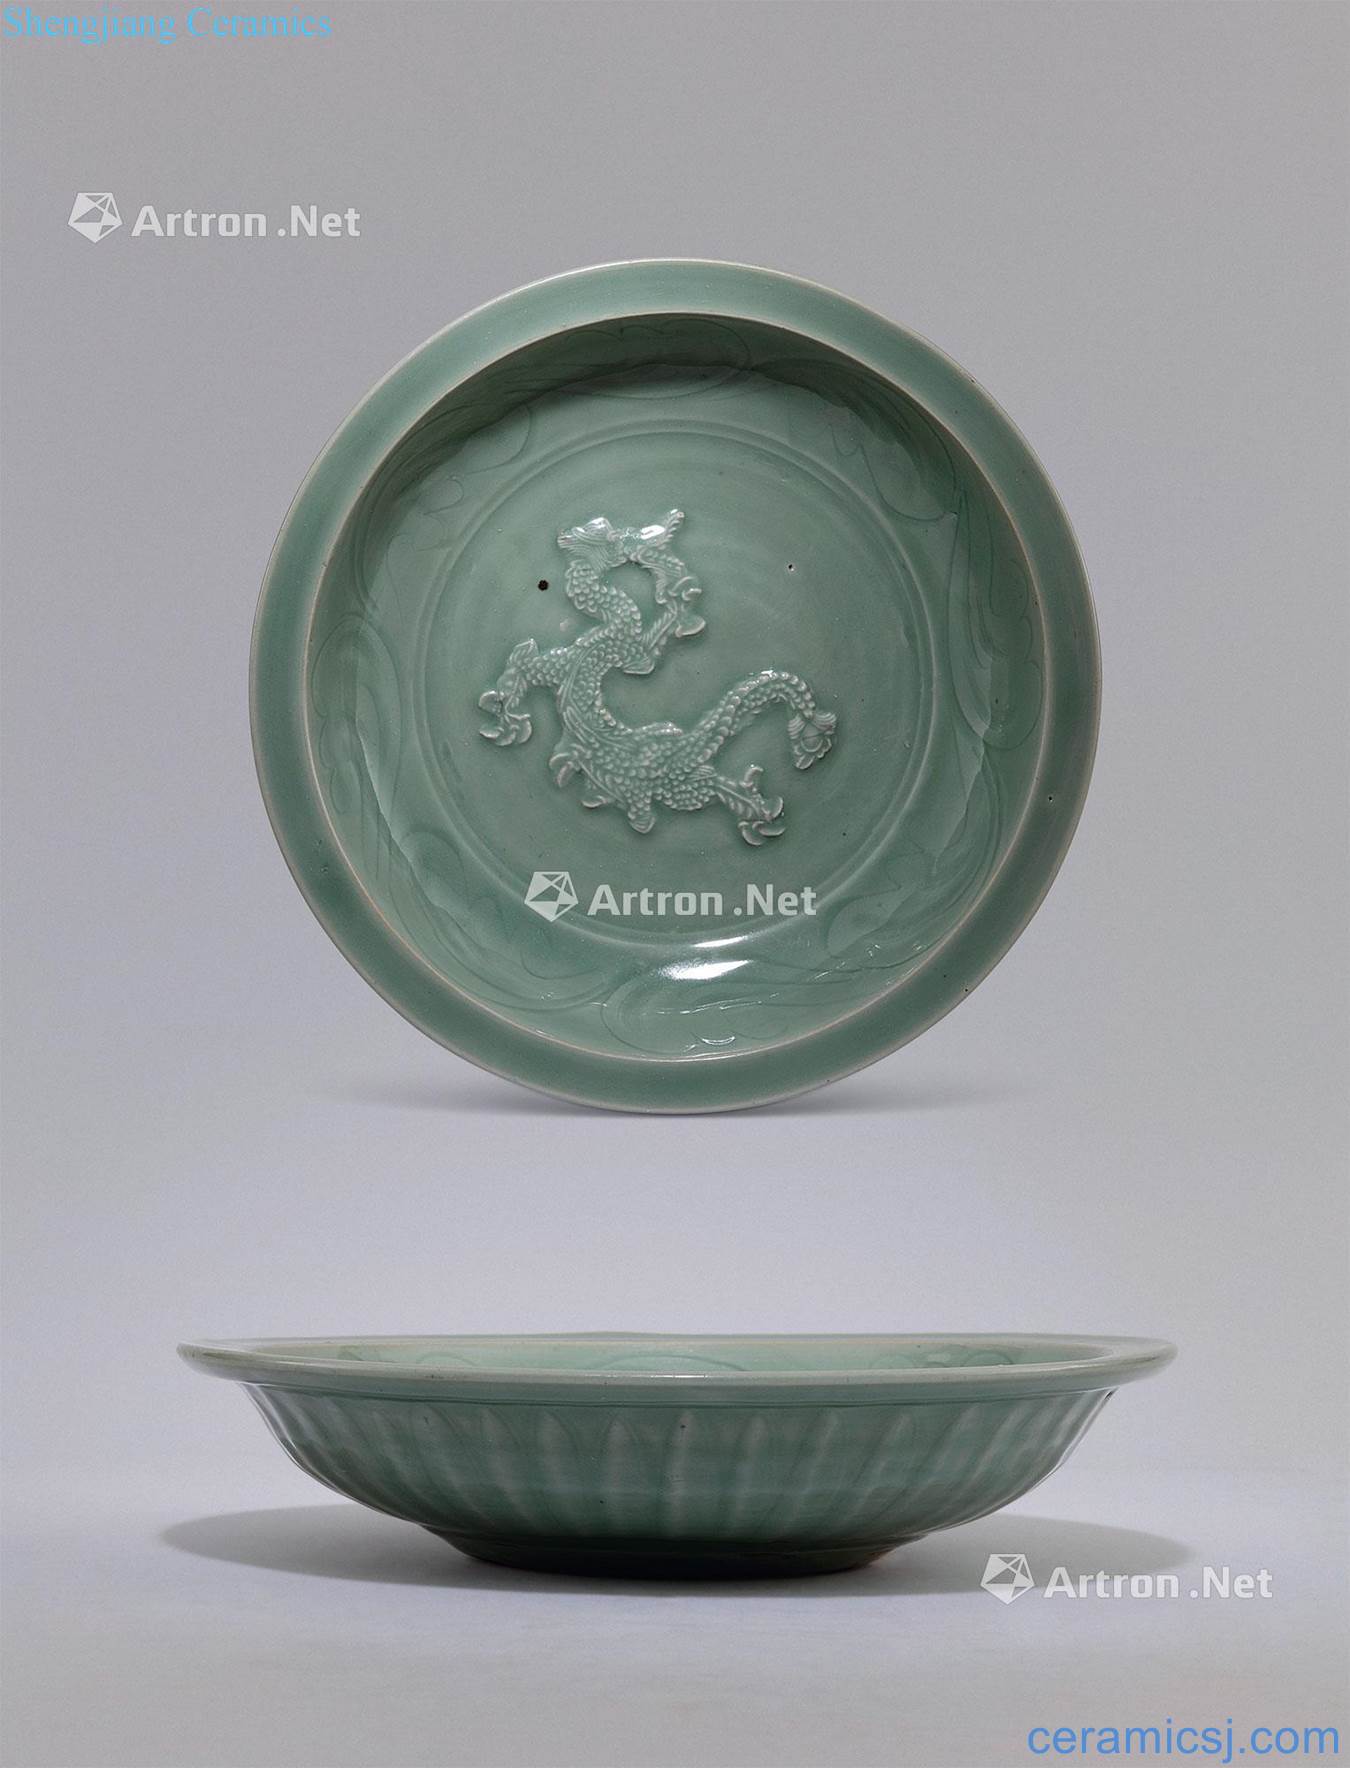 The yuan dynasty Longquan celadon carved dragon grain market